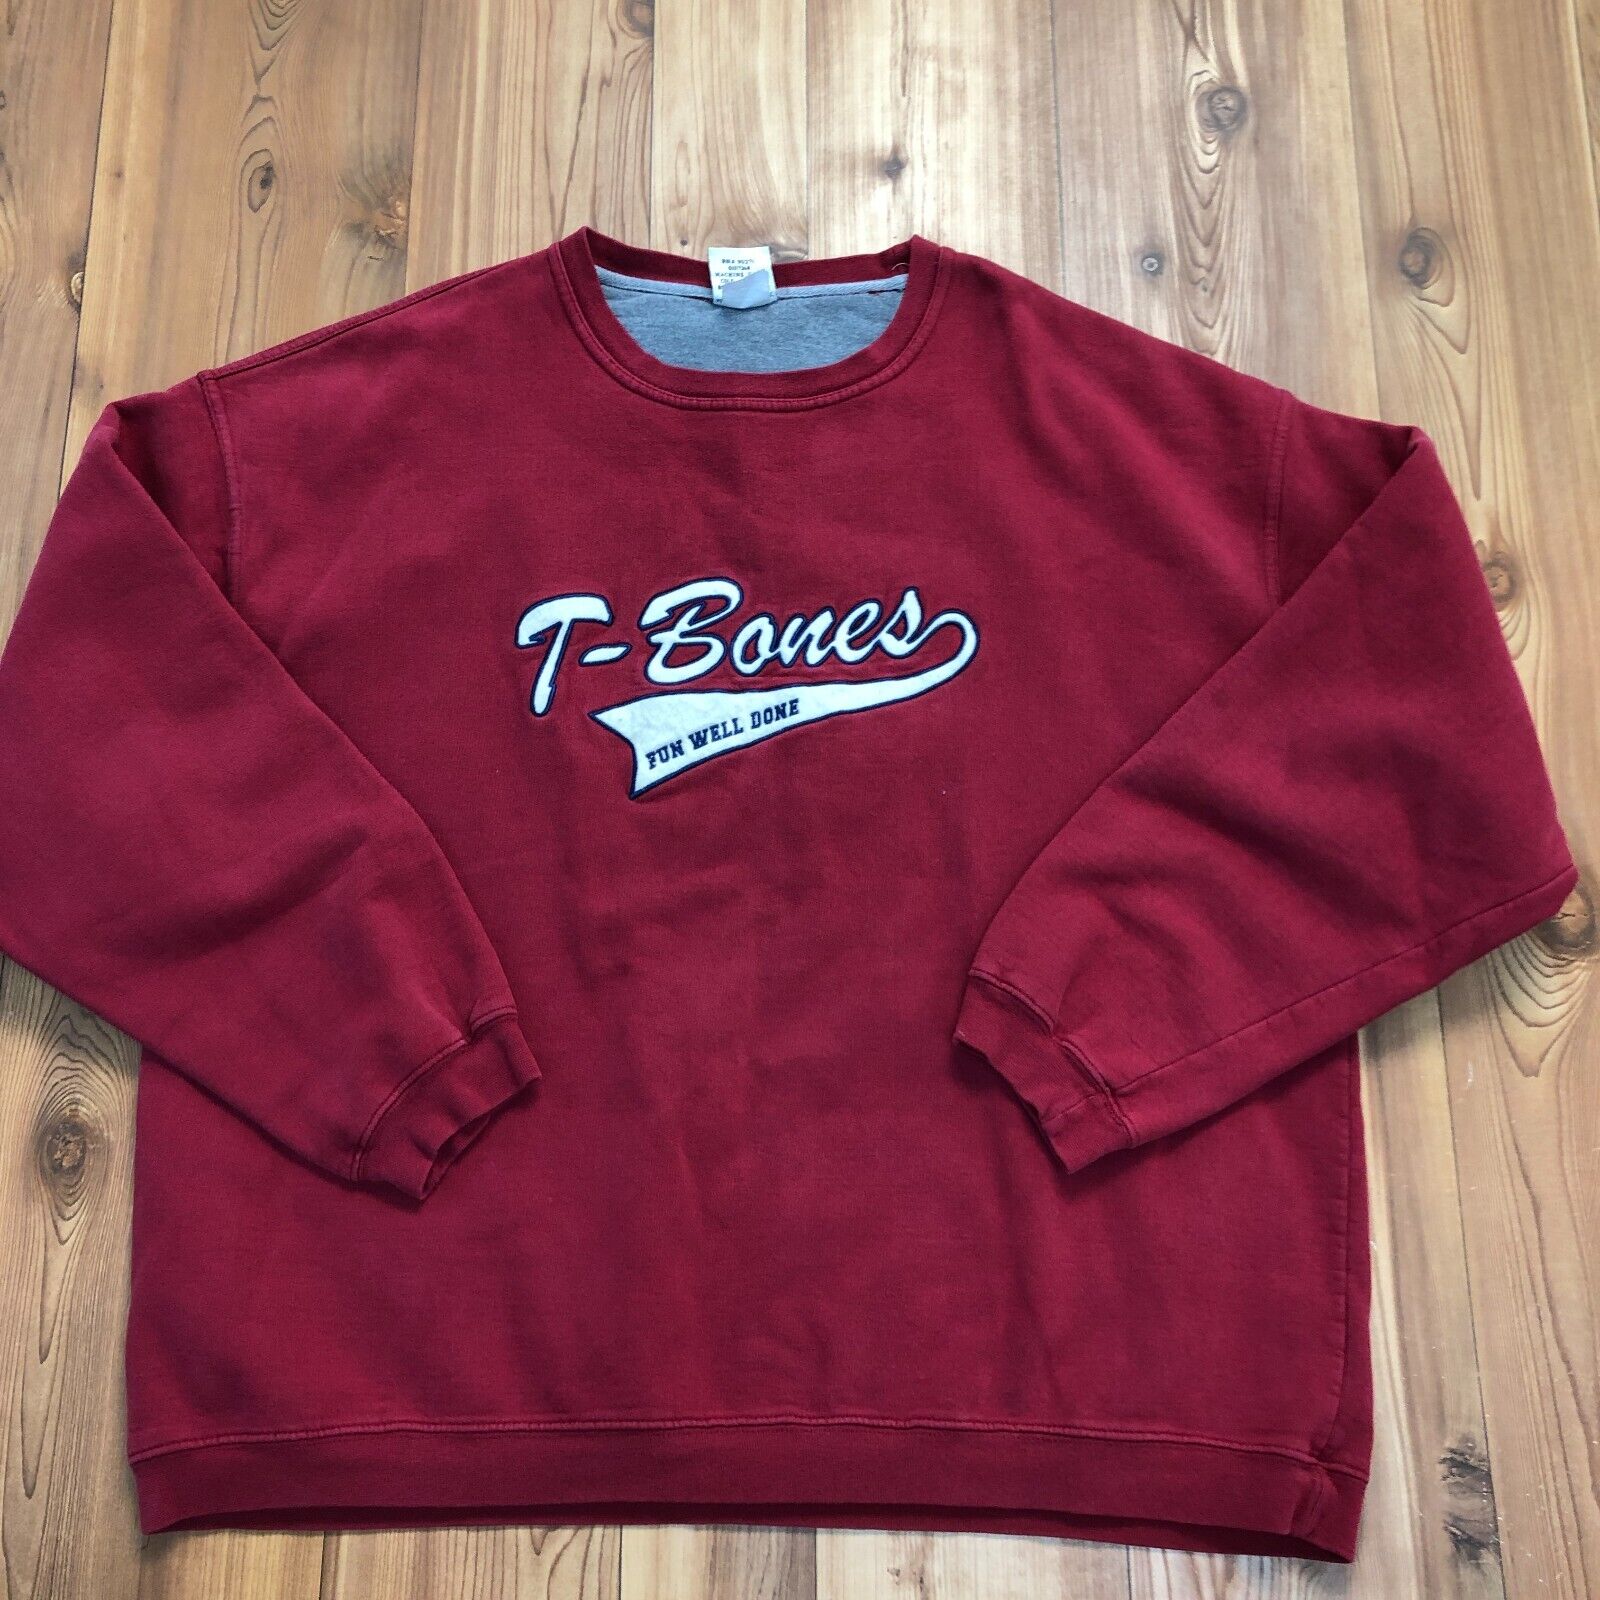 Camp David Red T-Bones Pullover Long Sleeve Sweatshirt Adult Size 2XL